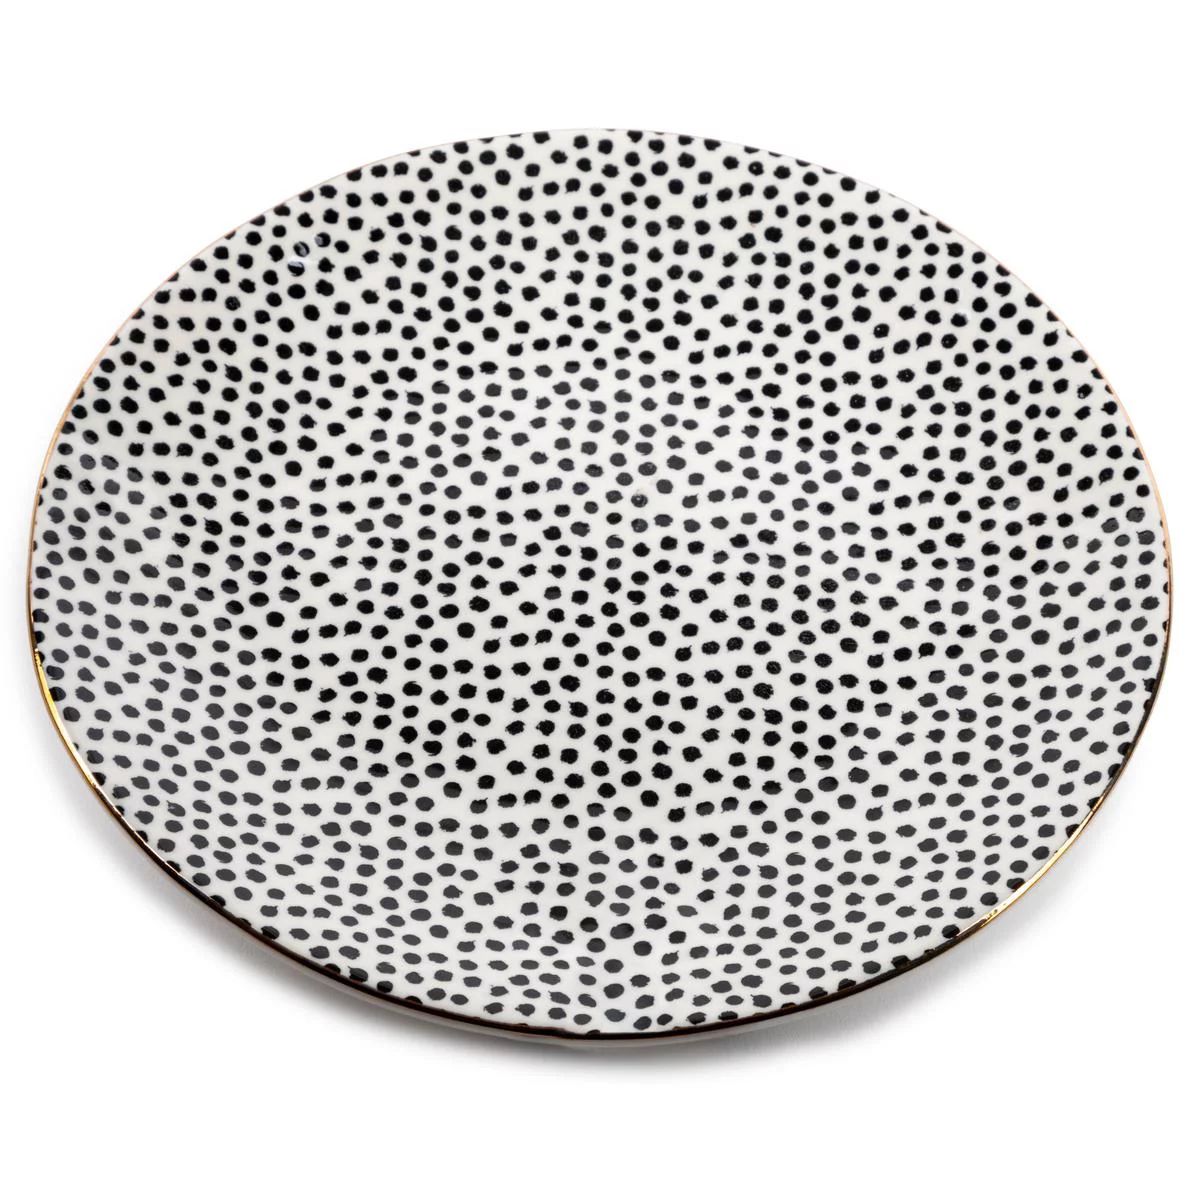 Thyme & Table Dinnerware Black & White Dot Stoneware Round Salad Plate - Walmart.com | Walmart (US)